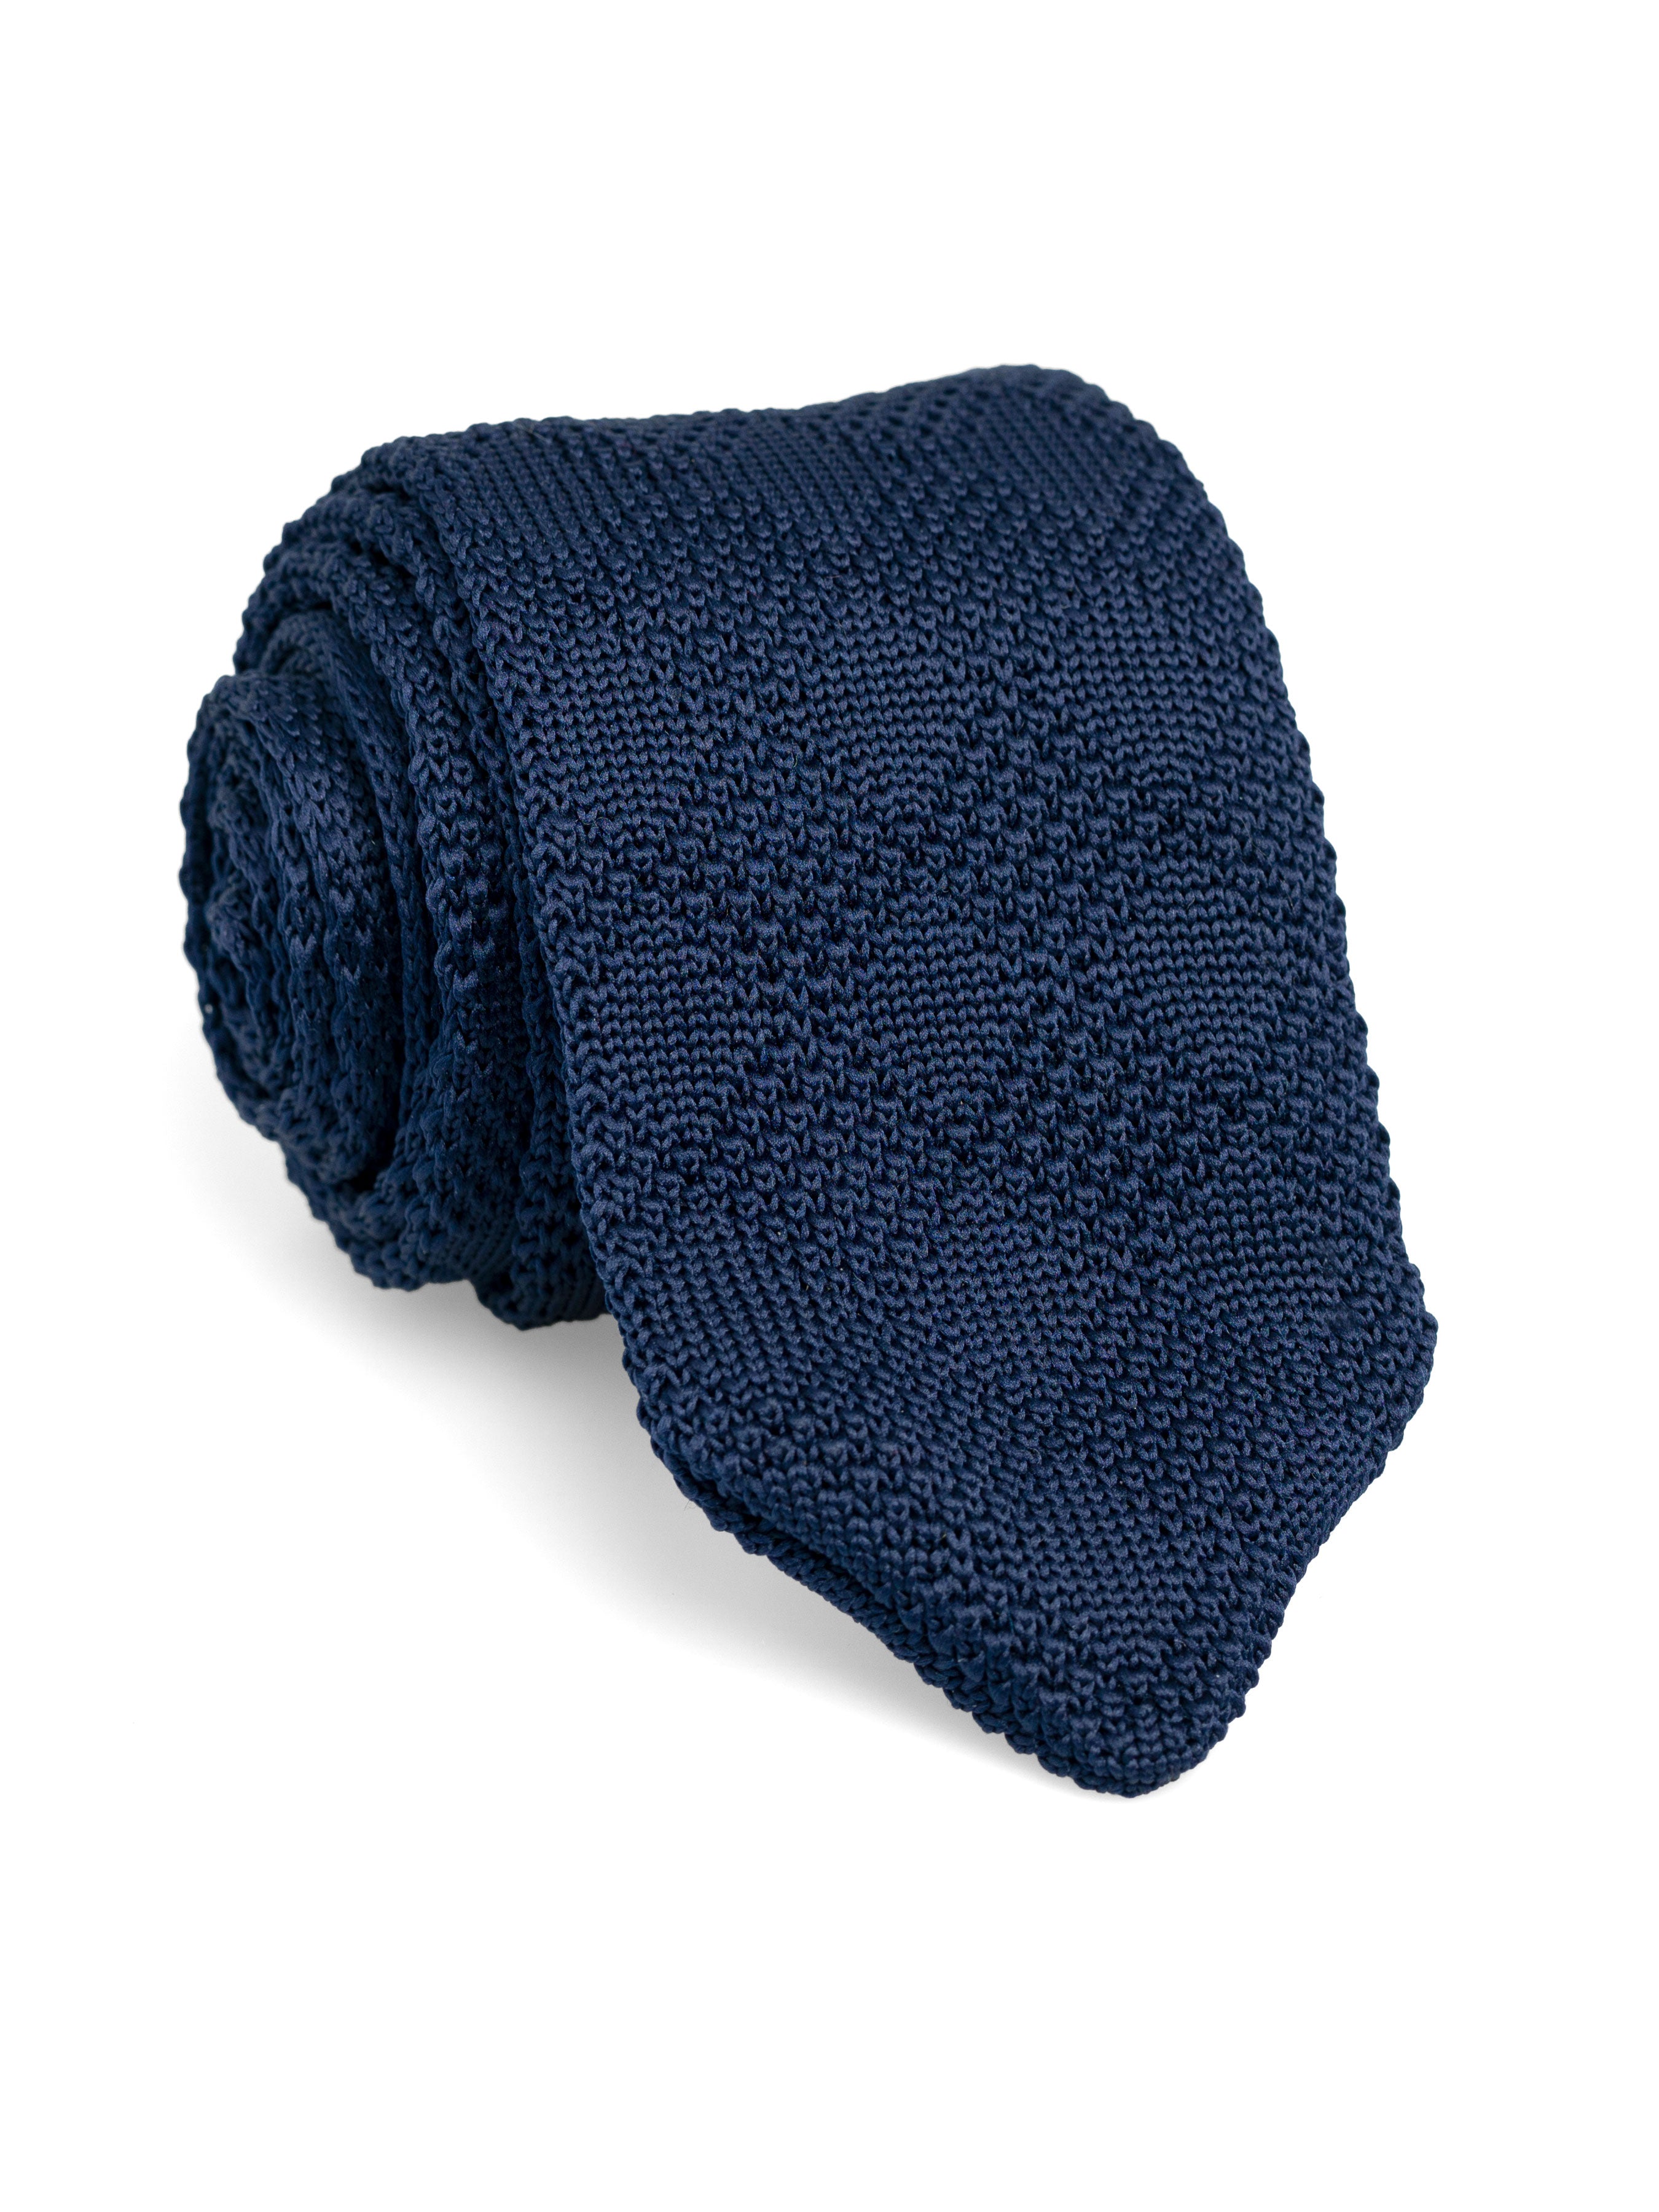 Knit Tie - Navy Blue - Zeve Shoes